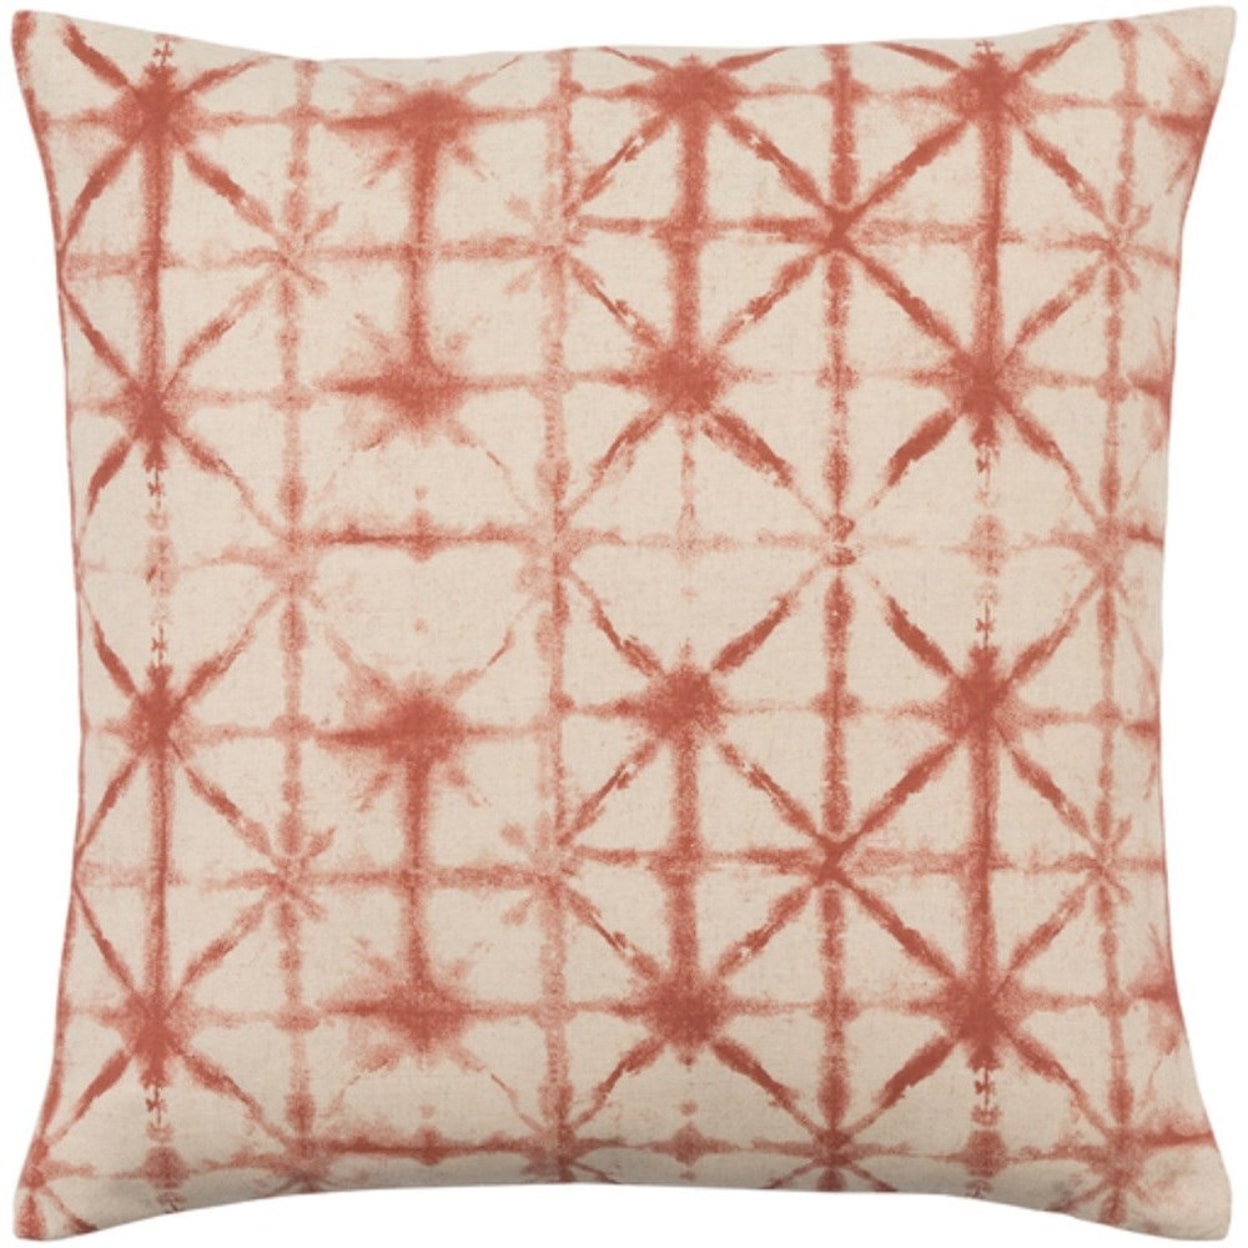 Ruby-Gordon Accents Nebula Pillow